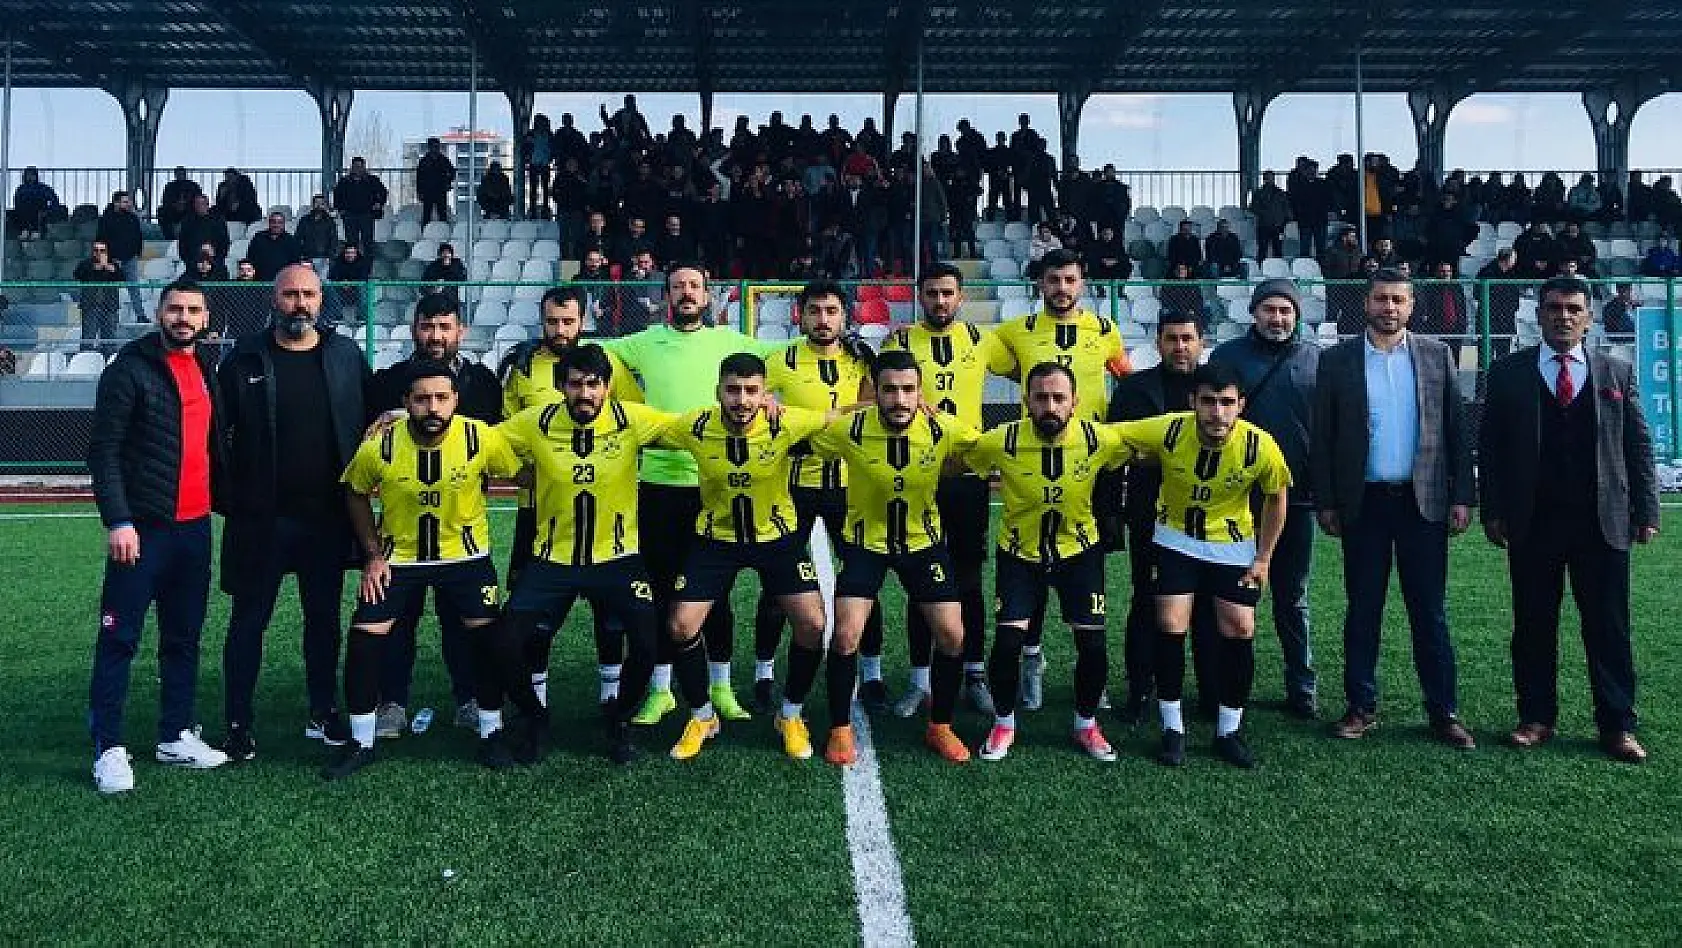 Haftanın maçı Aksaray Gençlikspor'un